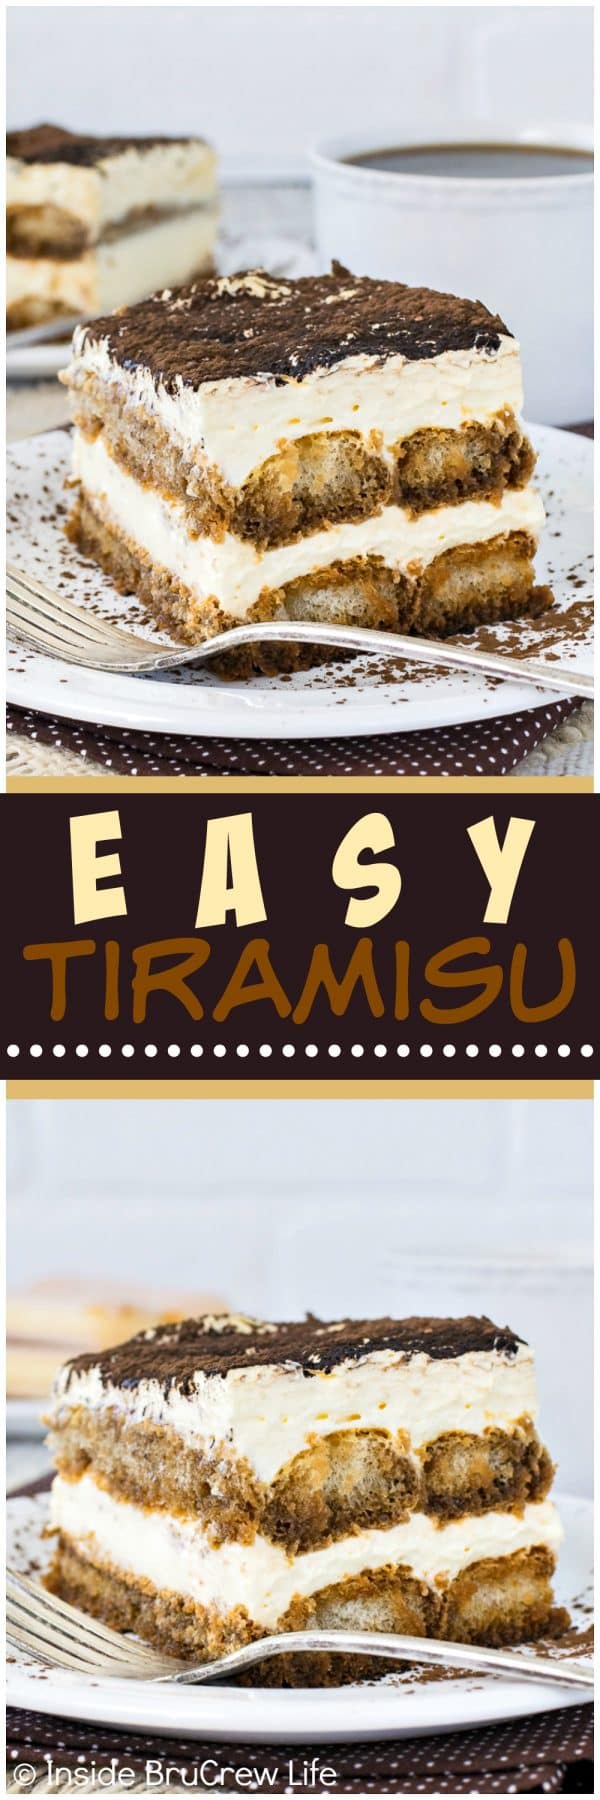 Easy Tiramisu Inside Brucrew Life